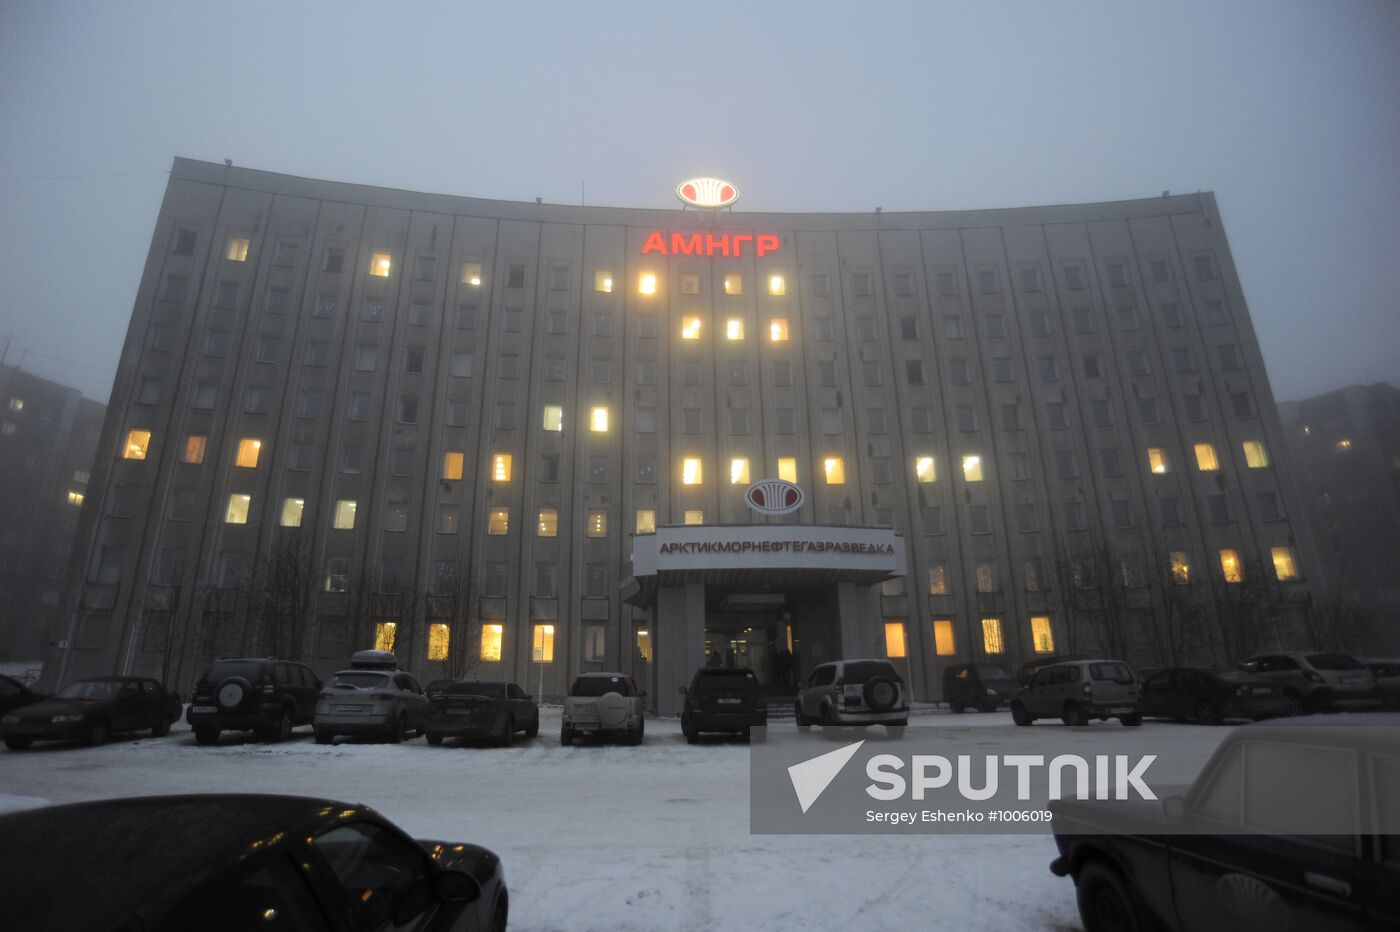 Arcticmorneftegazrazvedka company building in Murmansk